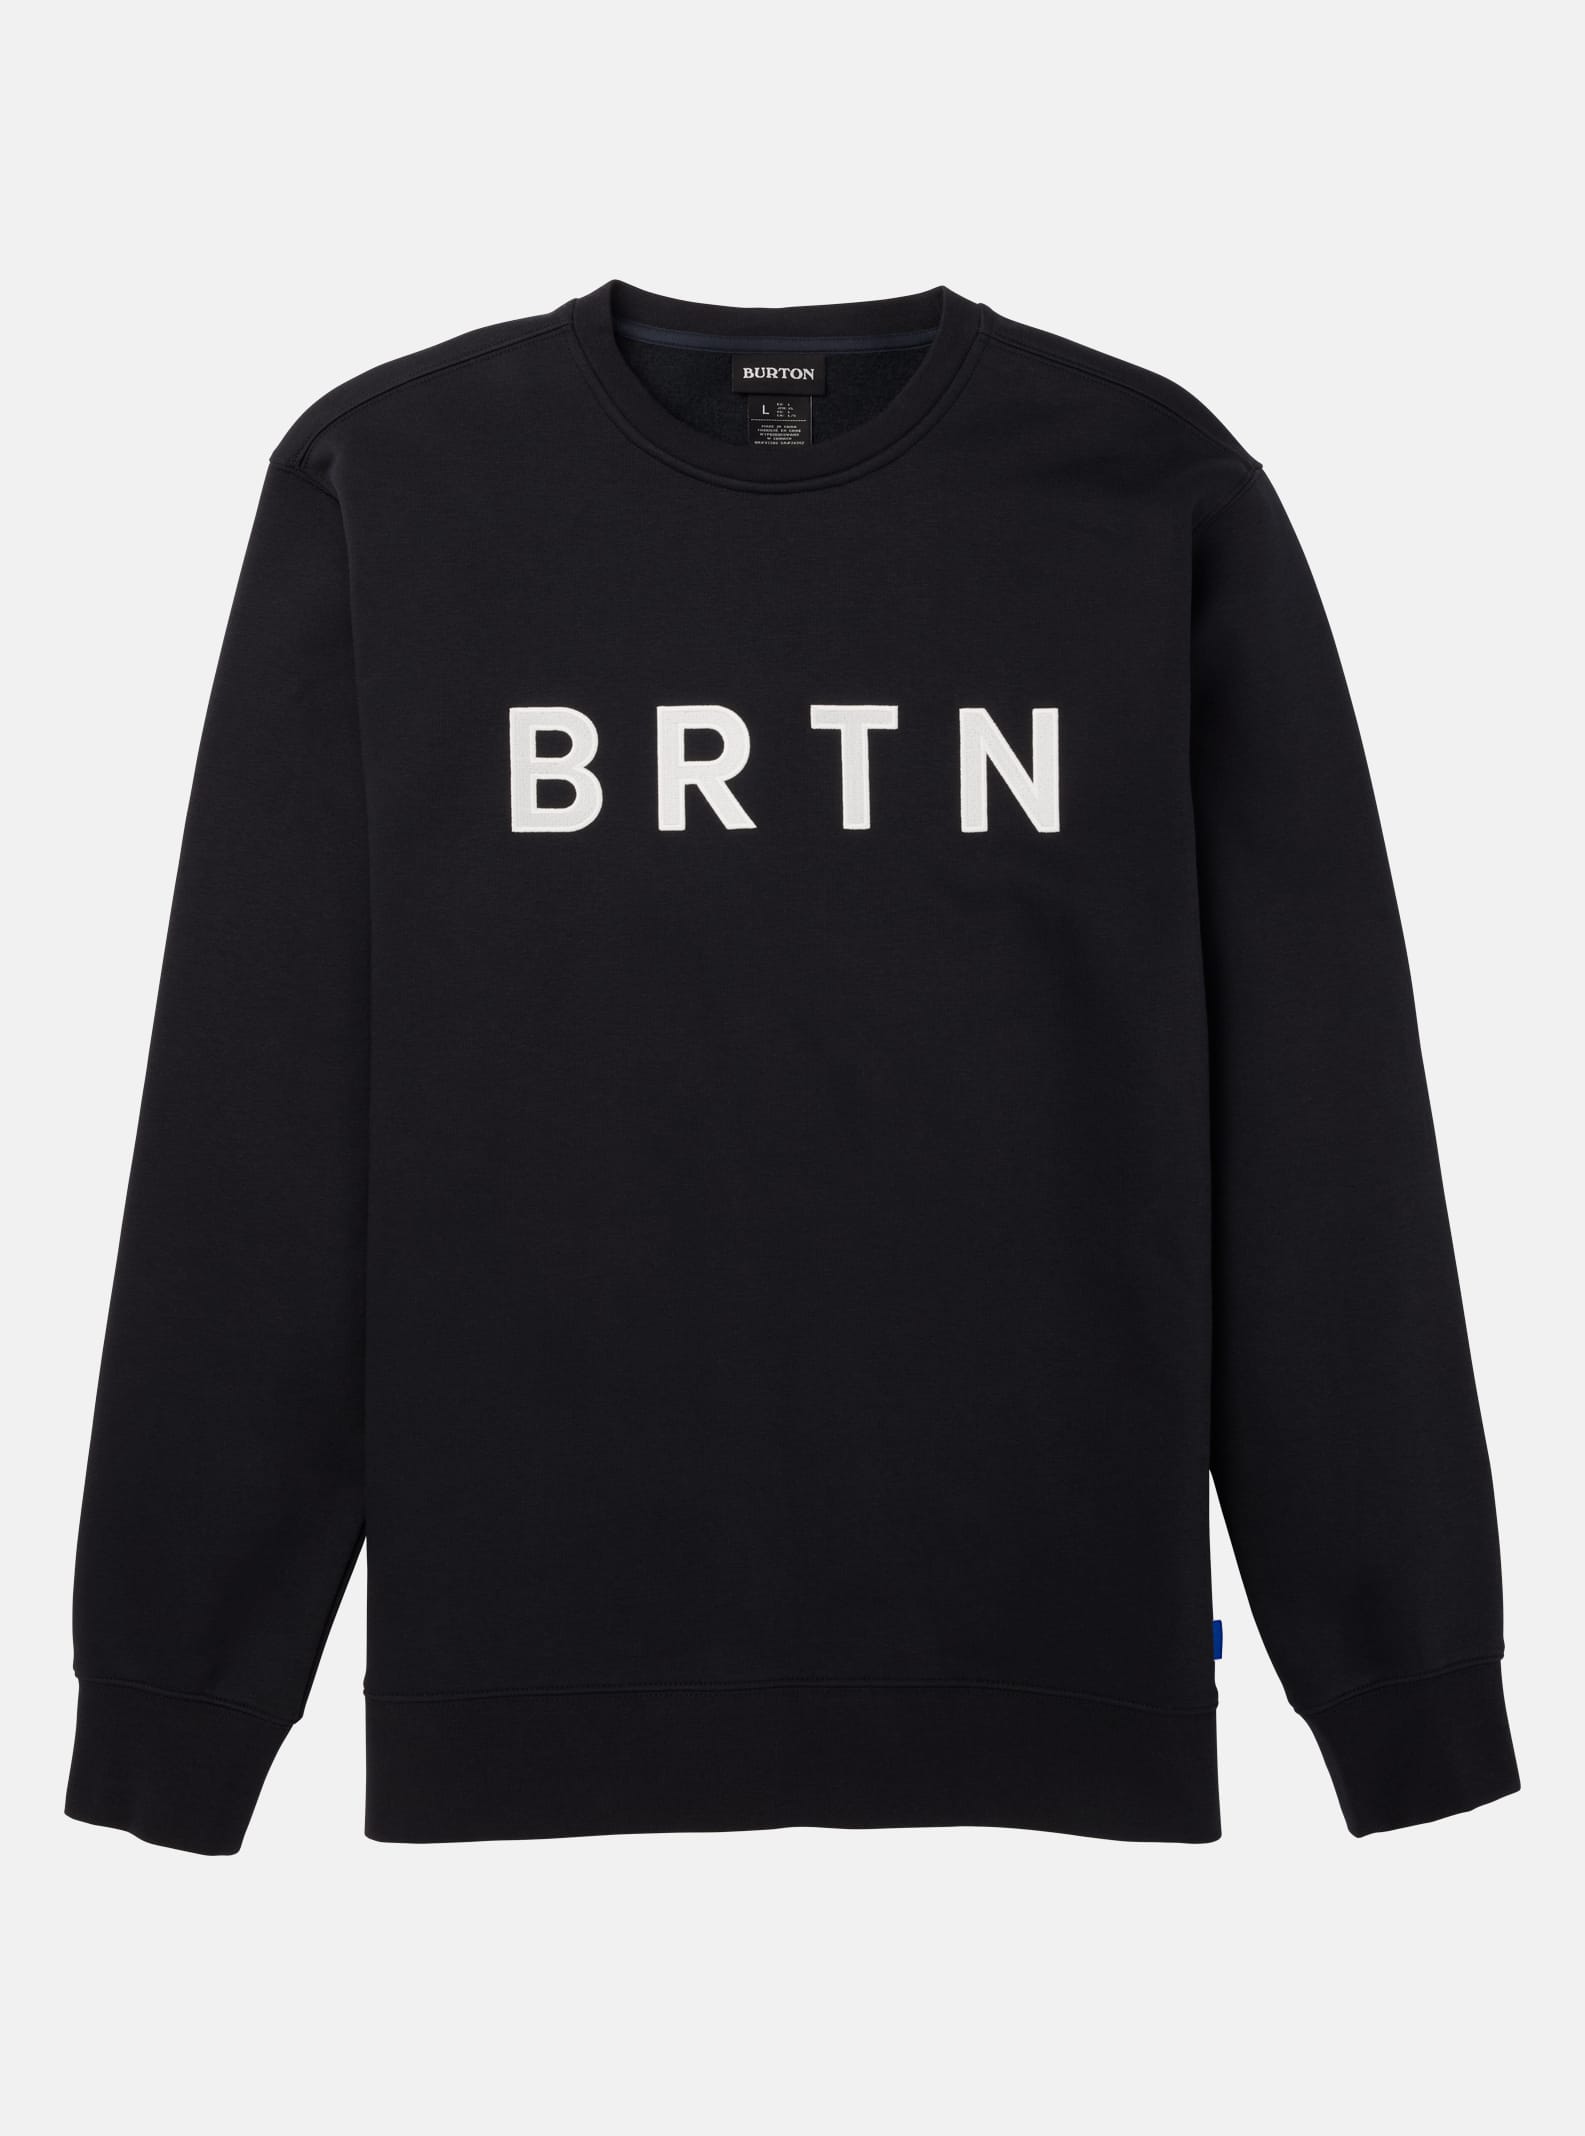 Burton Sweatshirt - BRTN Crewneck, True Black, L